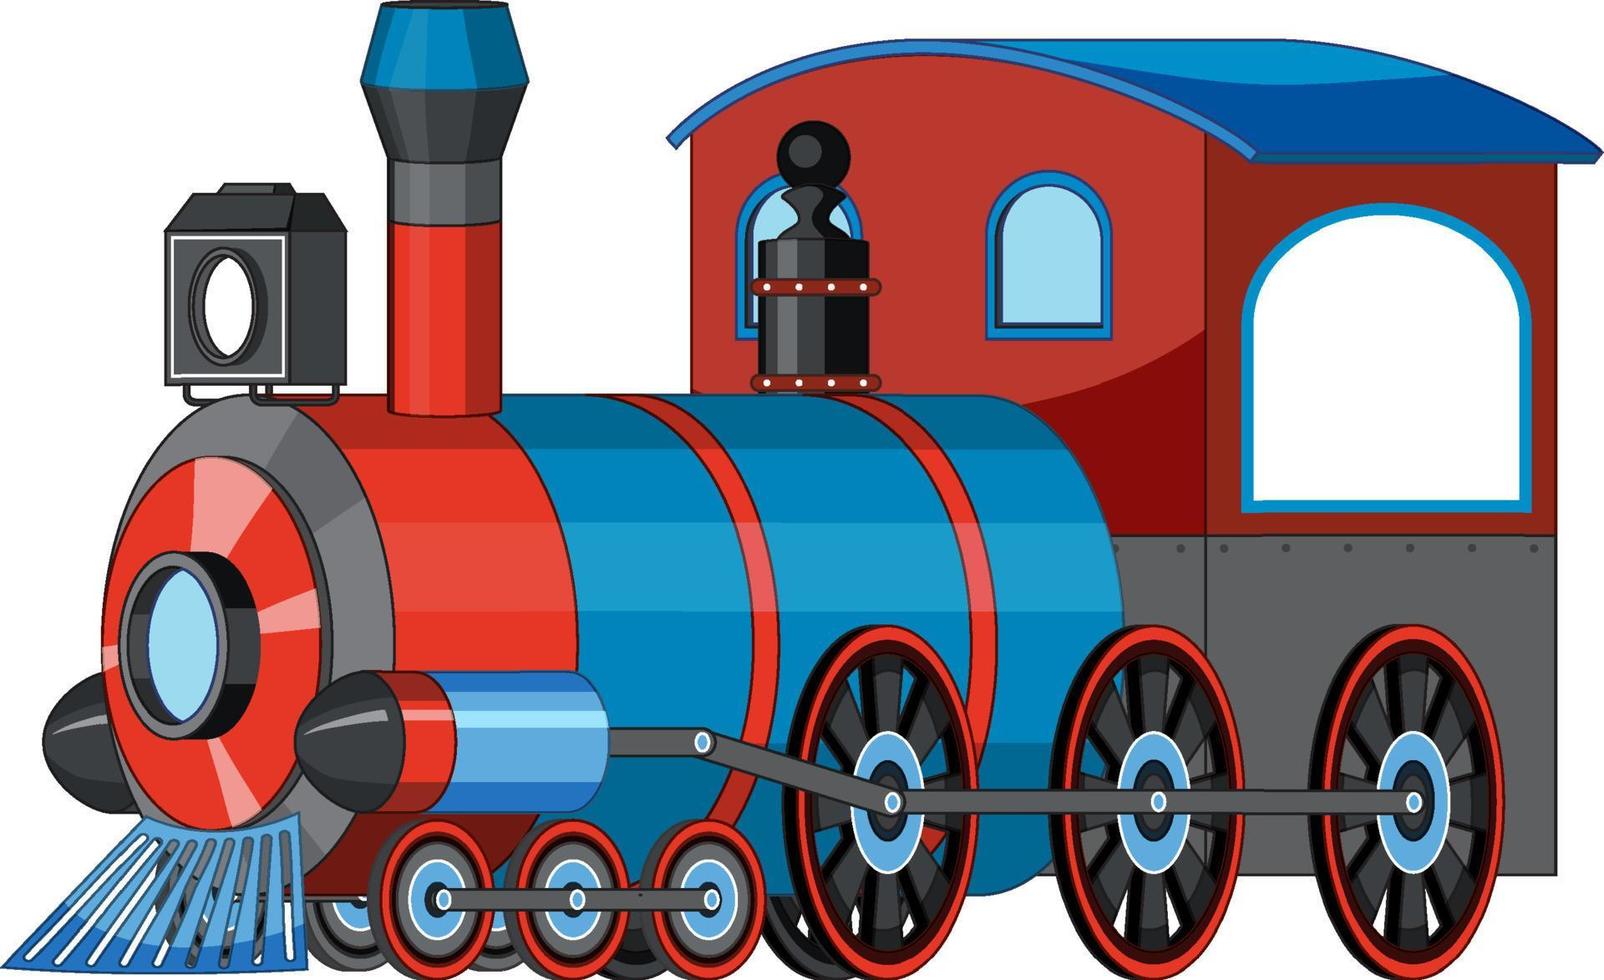 locomotiva a vapore treno stile vintage vettore